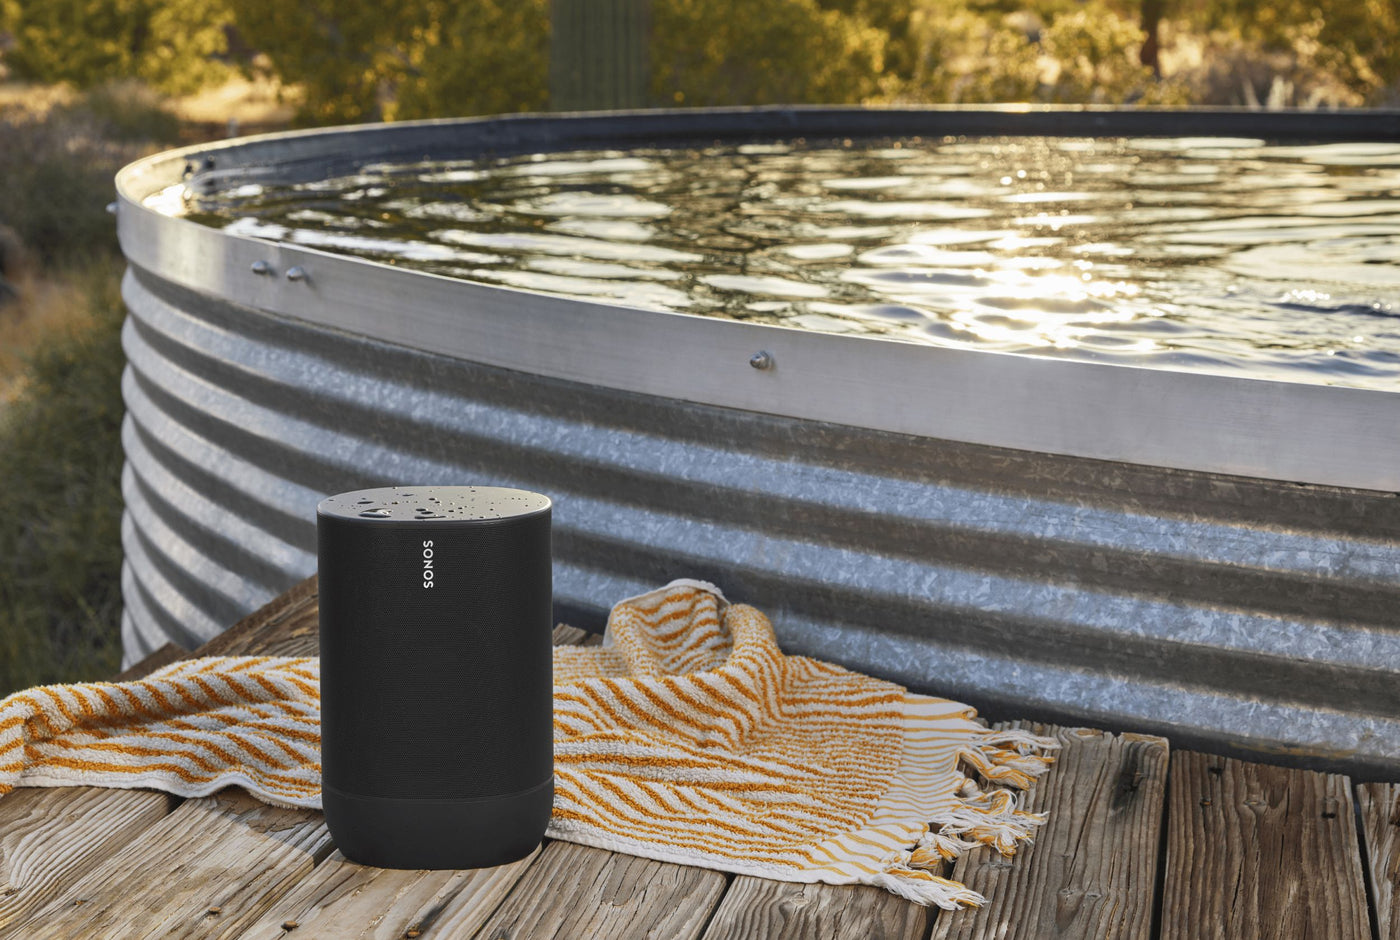 Sonos Move Wireless Smart Speaker - Wifi & Bluetooth